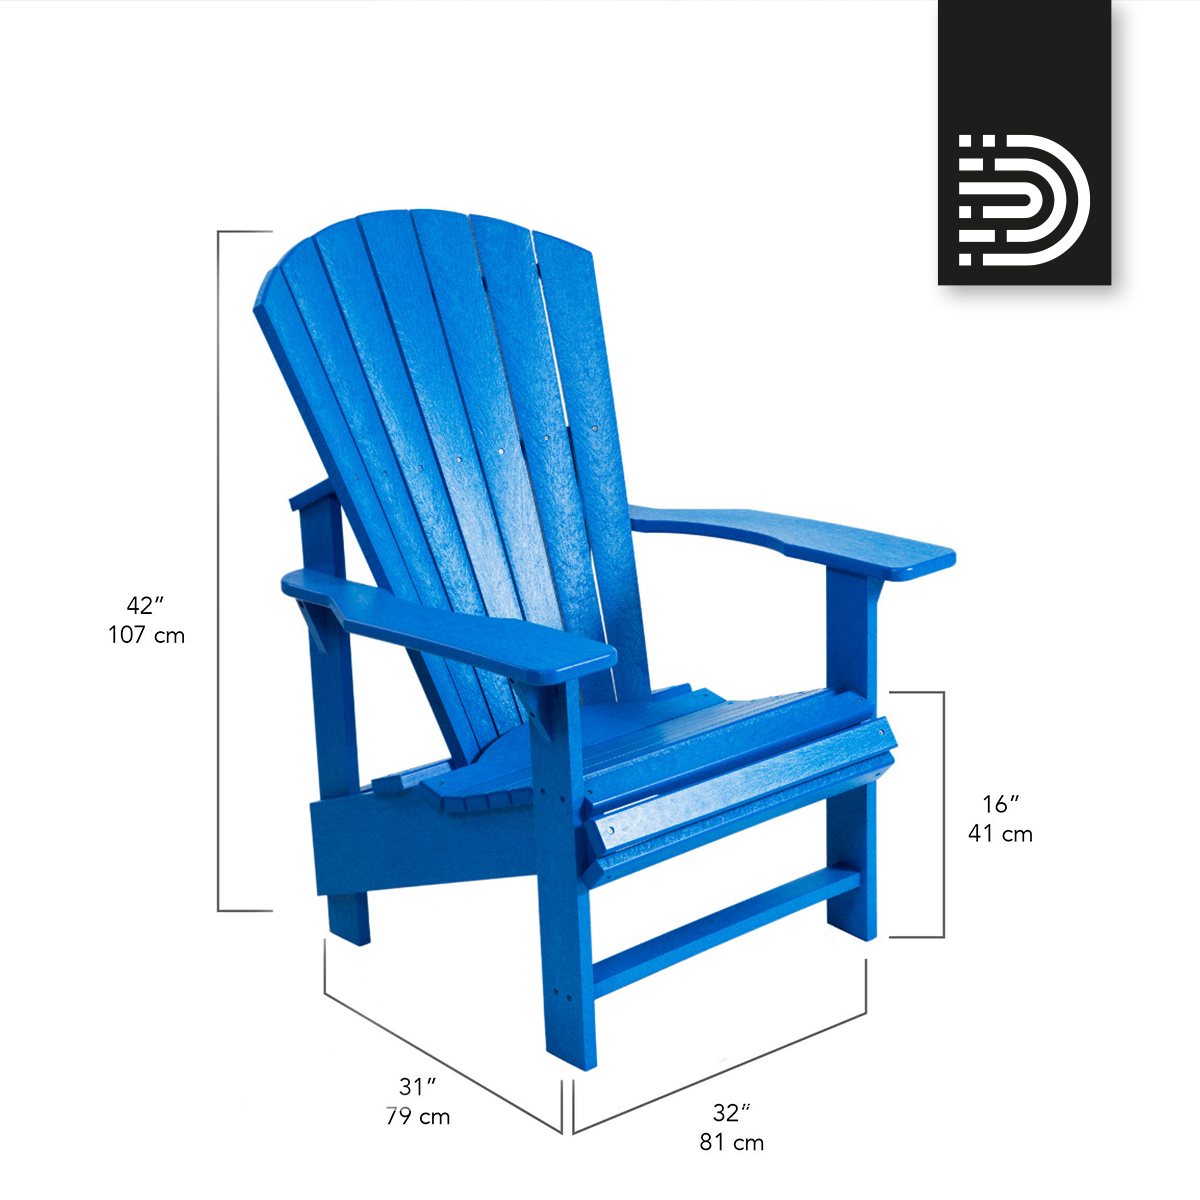 C03 Upright Adirondack Chair - blue 03